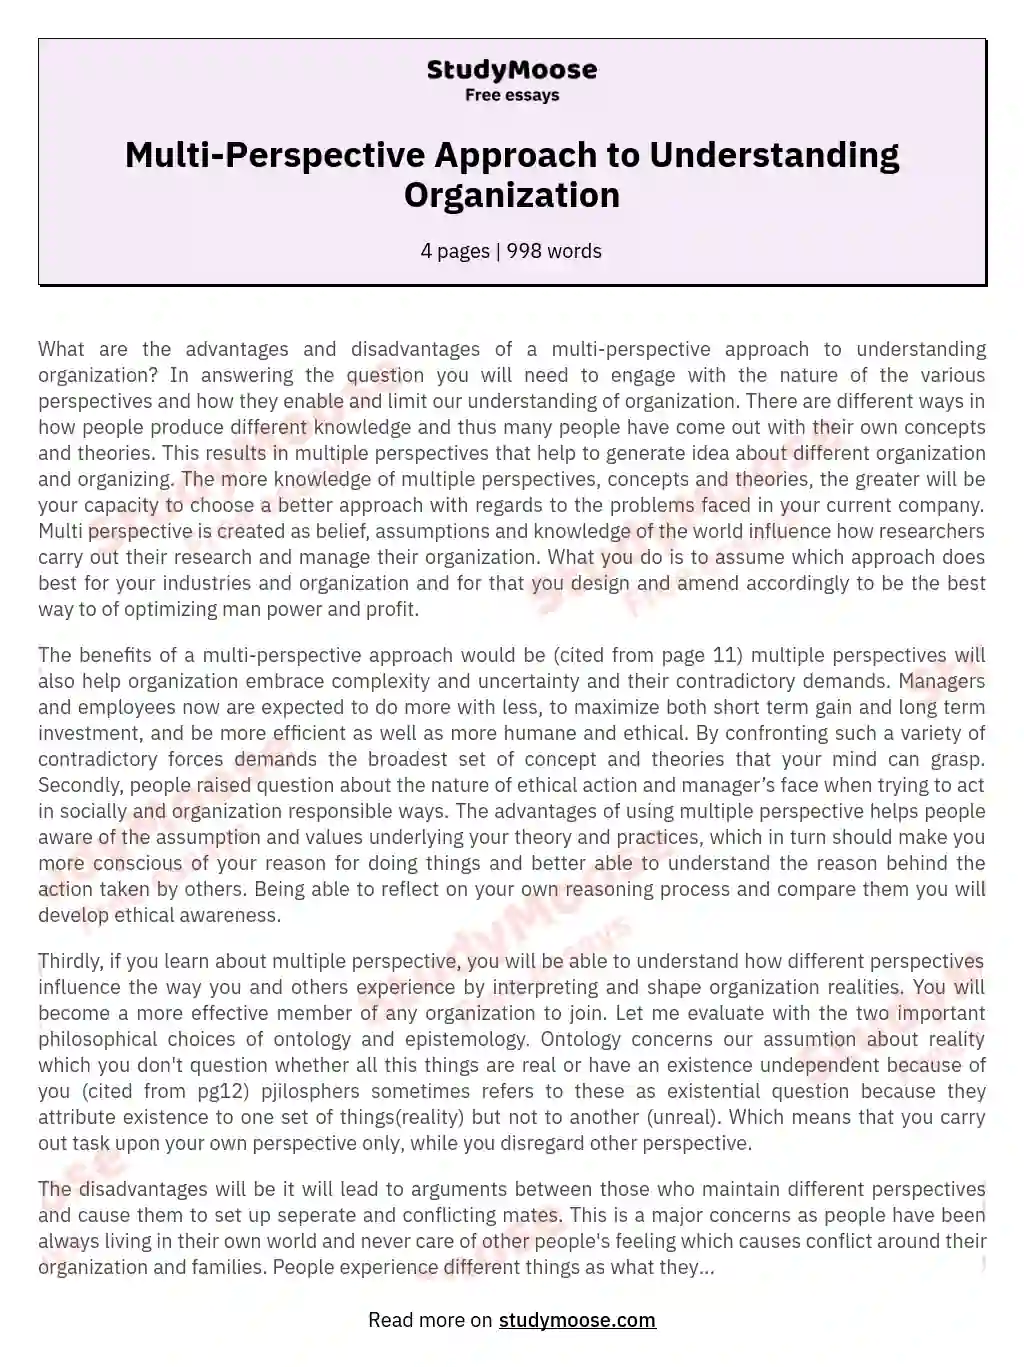 Multi-Perspective Approach to Understanding Organization essay